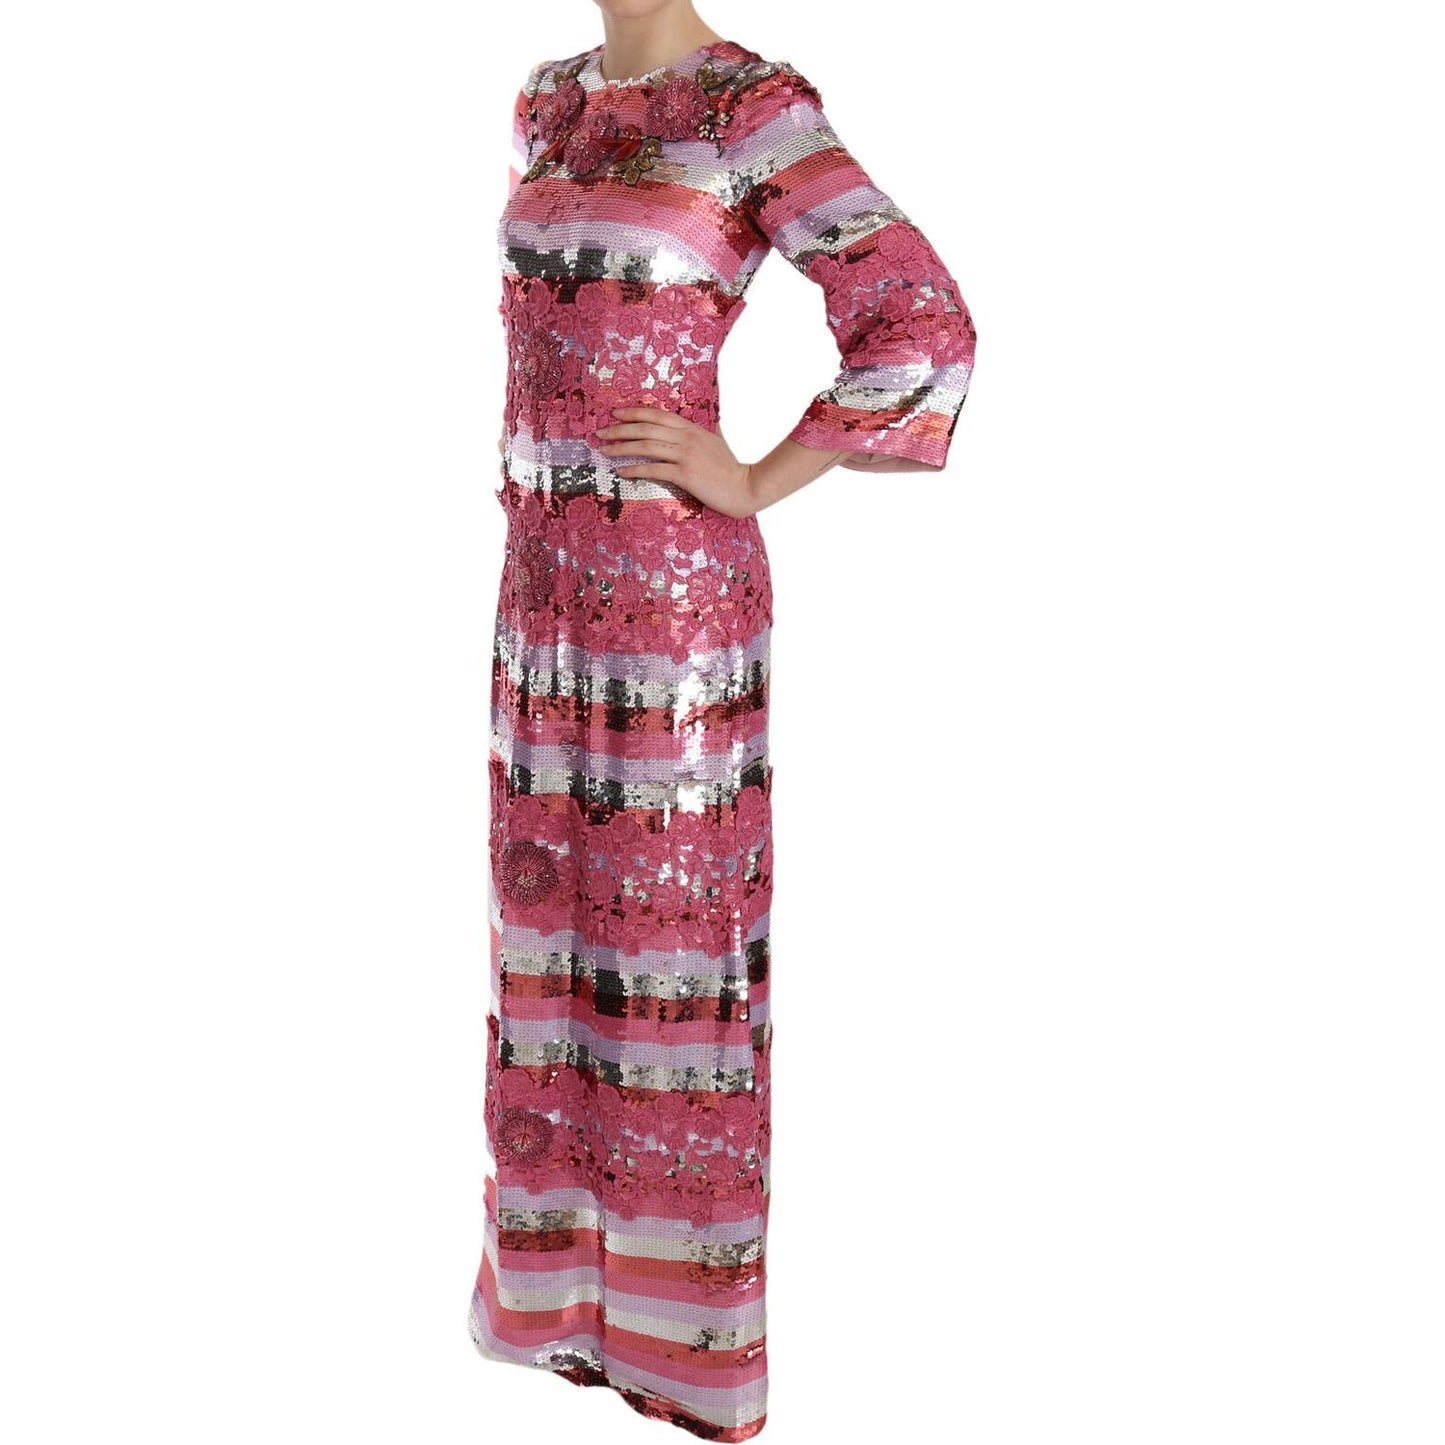 Dolce & Gabbana Opulent Pink Sequined Floor-Length Dress pink-floral-sequined-crystal-gown-dress